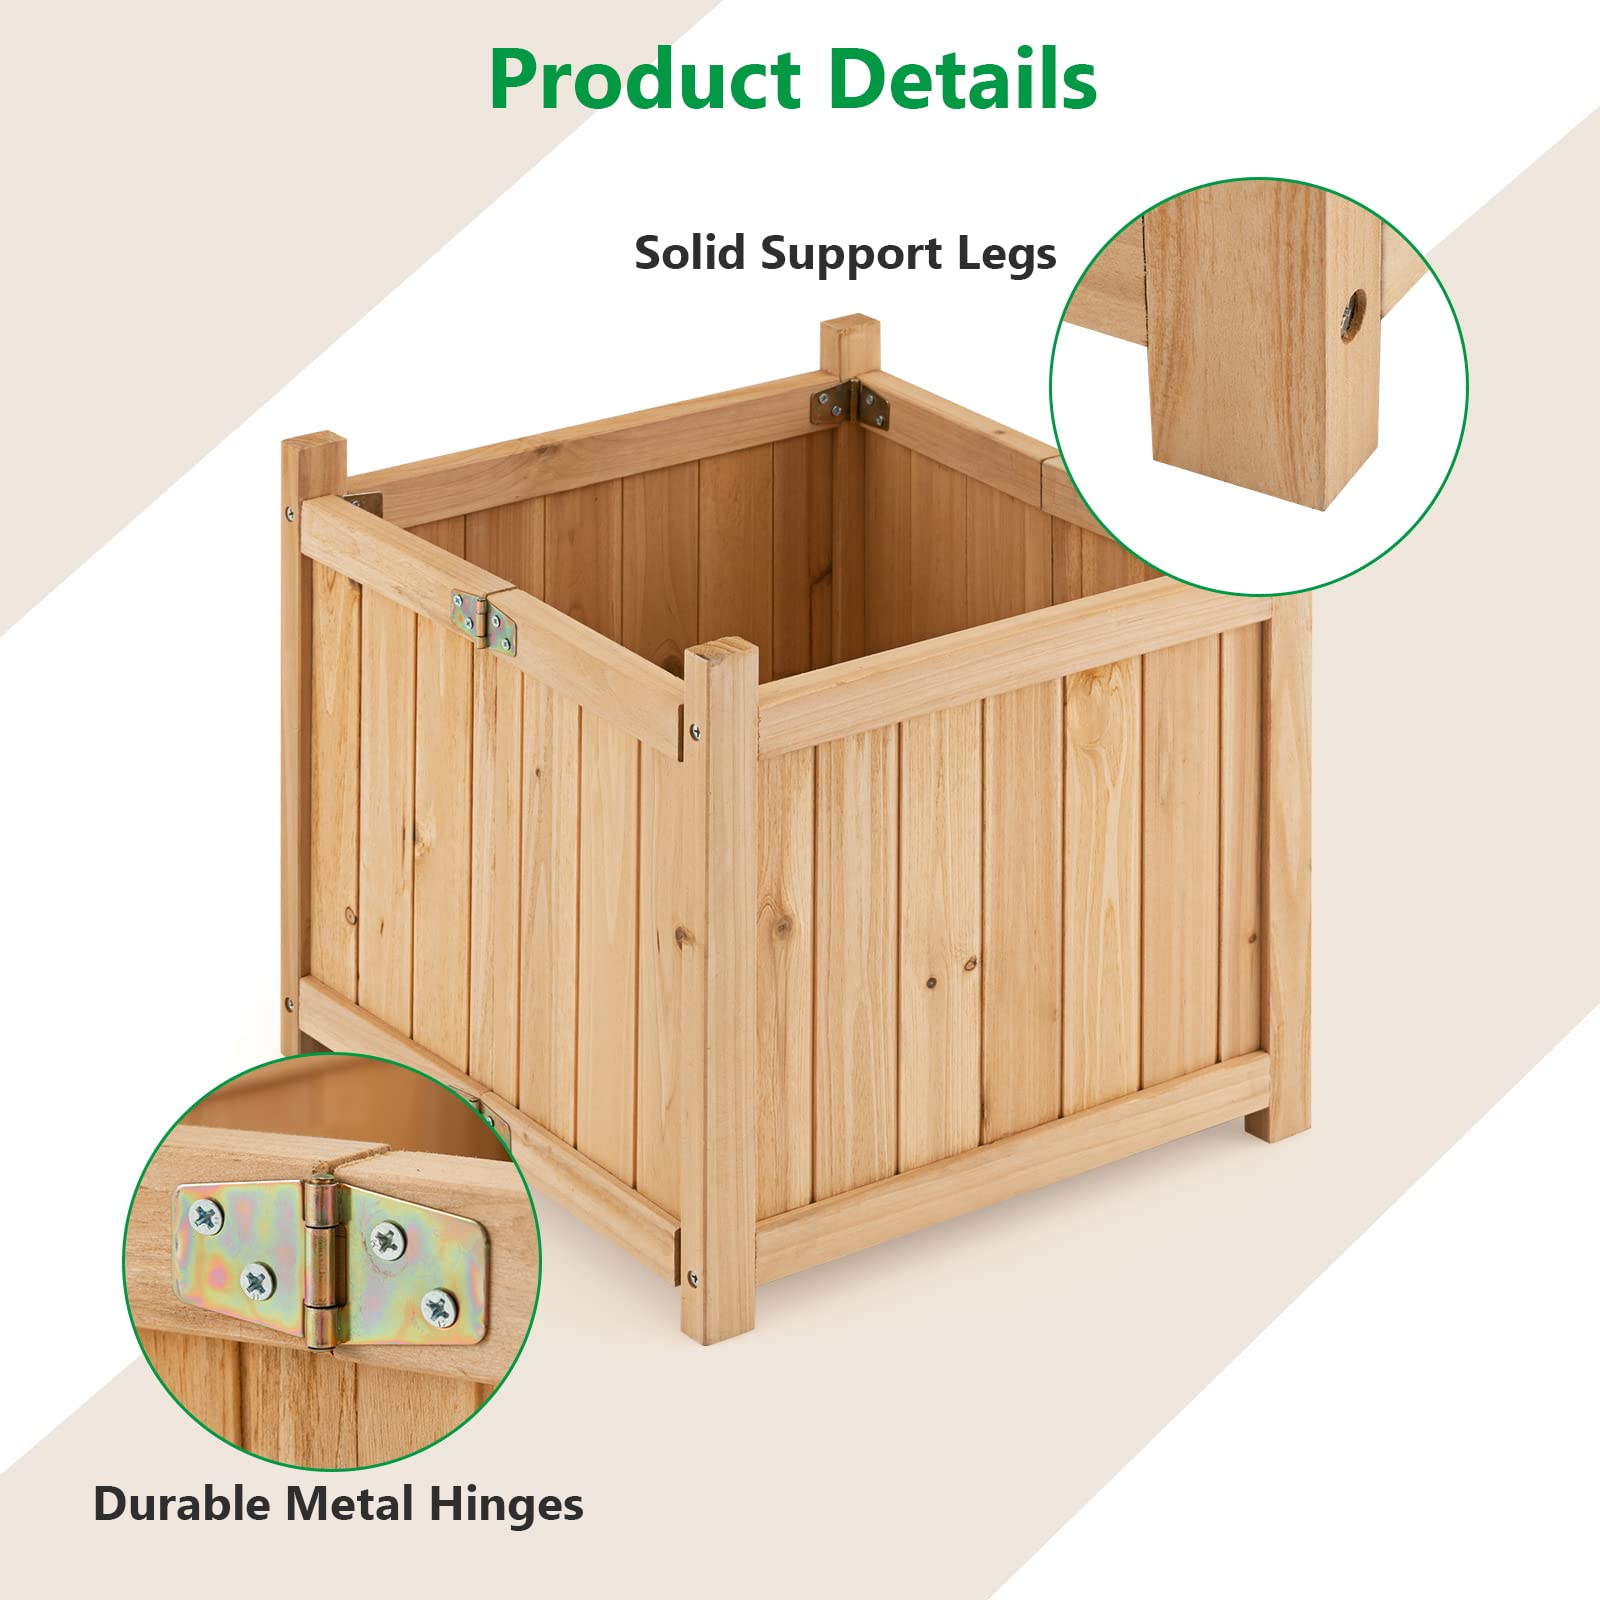 Giantex 15” Planter Raised Garden Bed - Wooden Planting Box, Outdoor Folding Square Planter